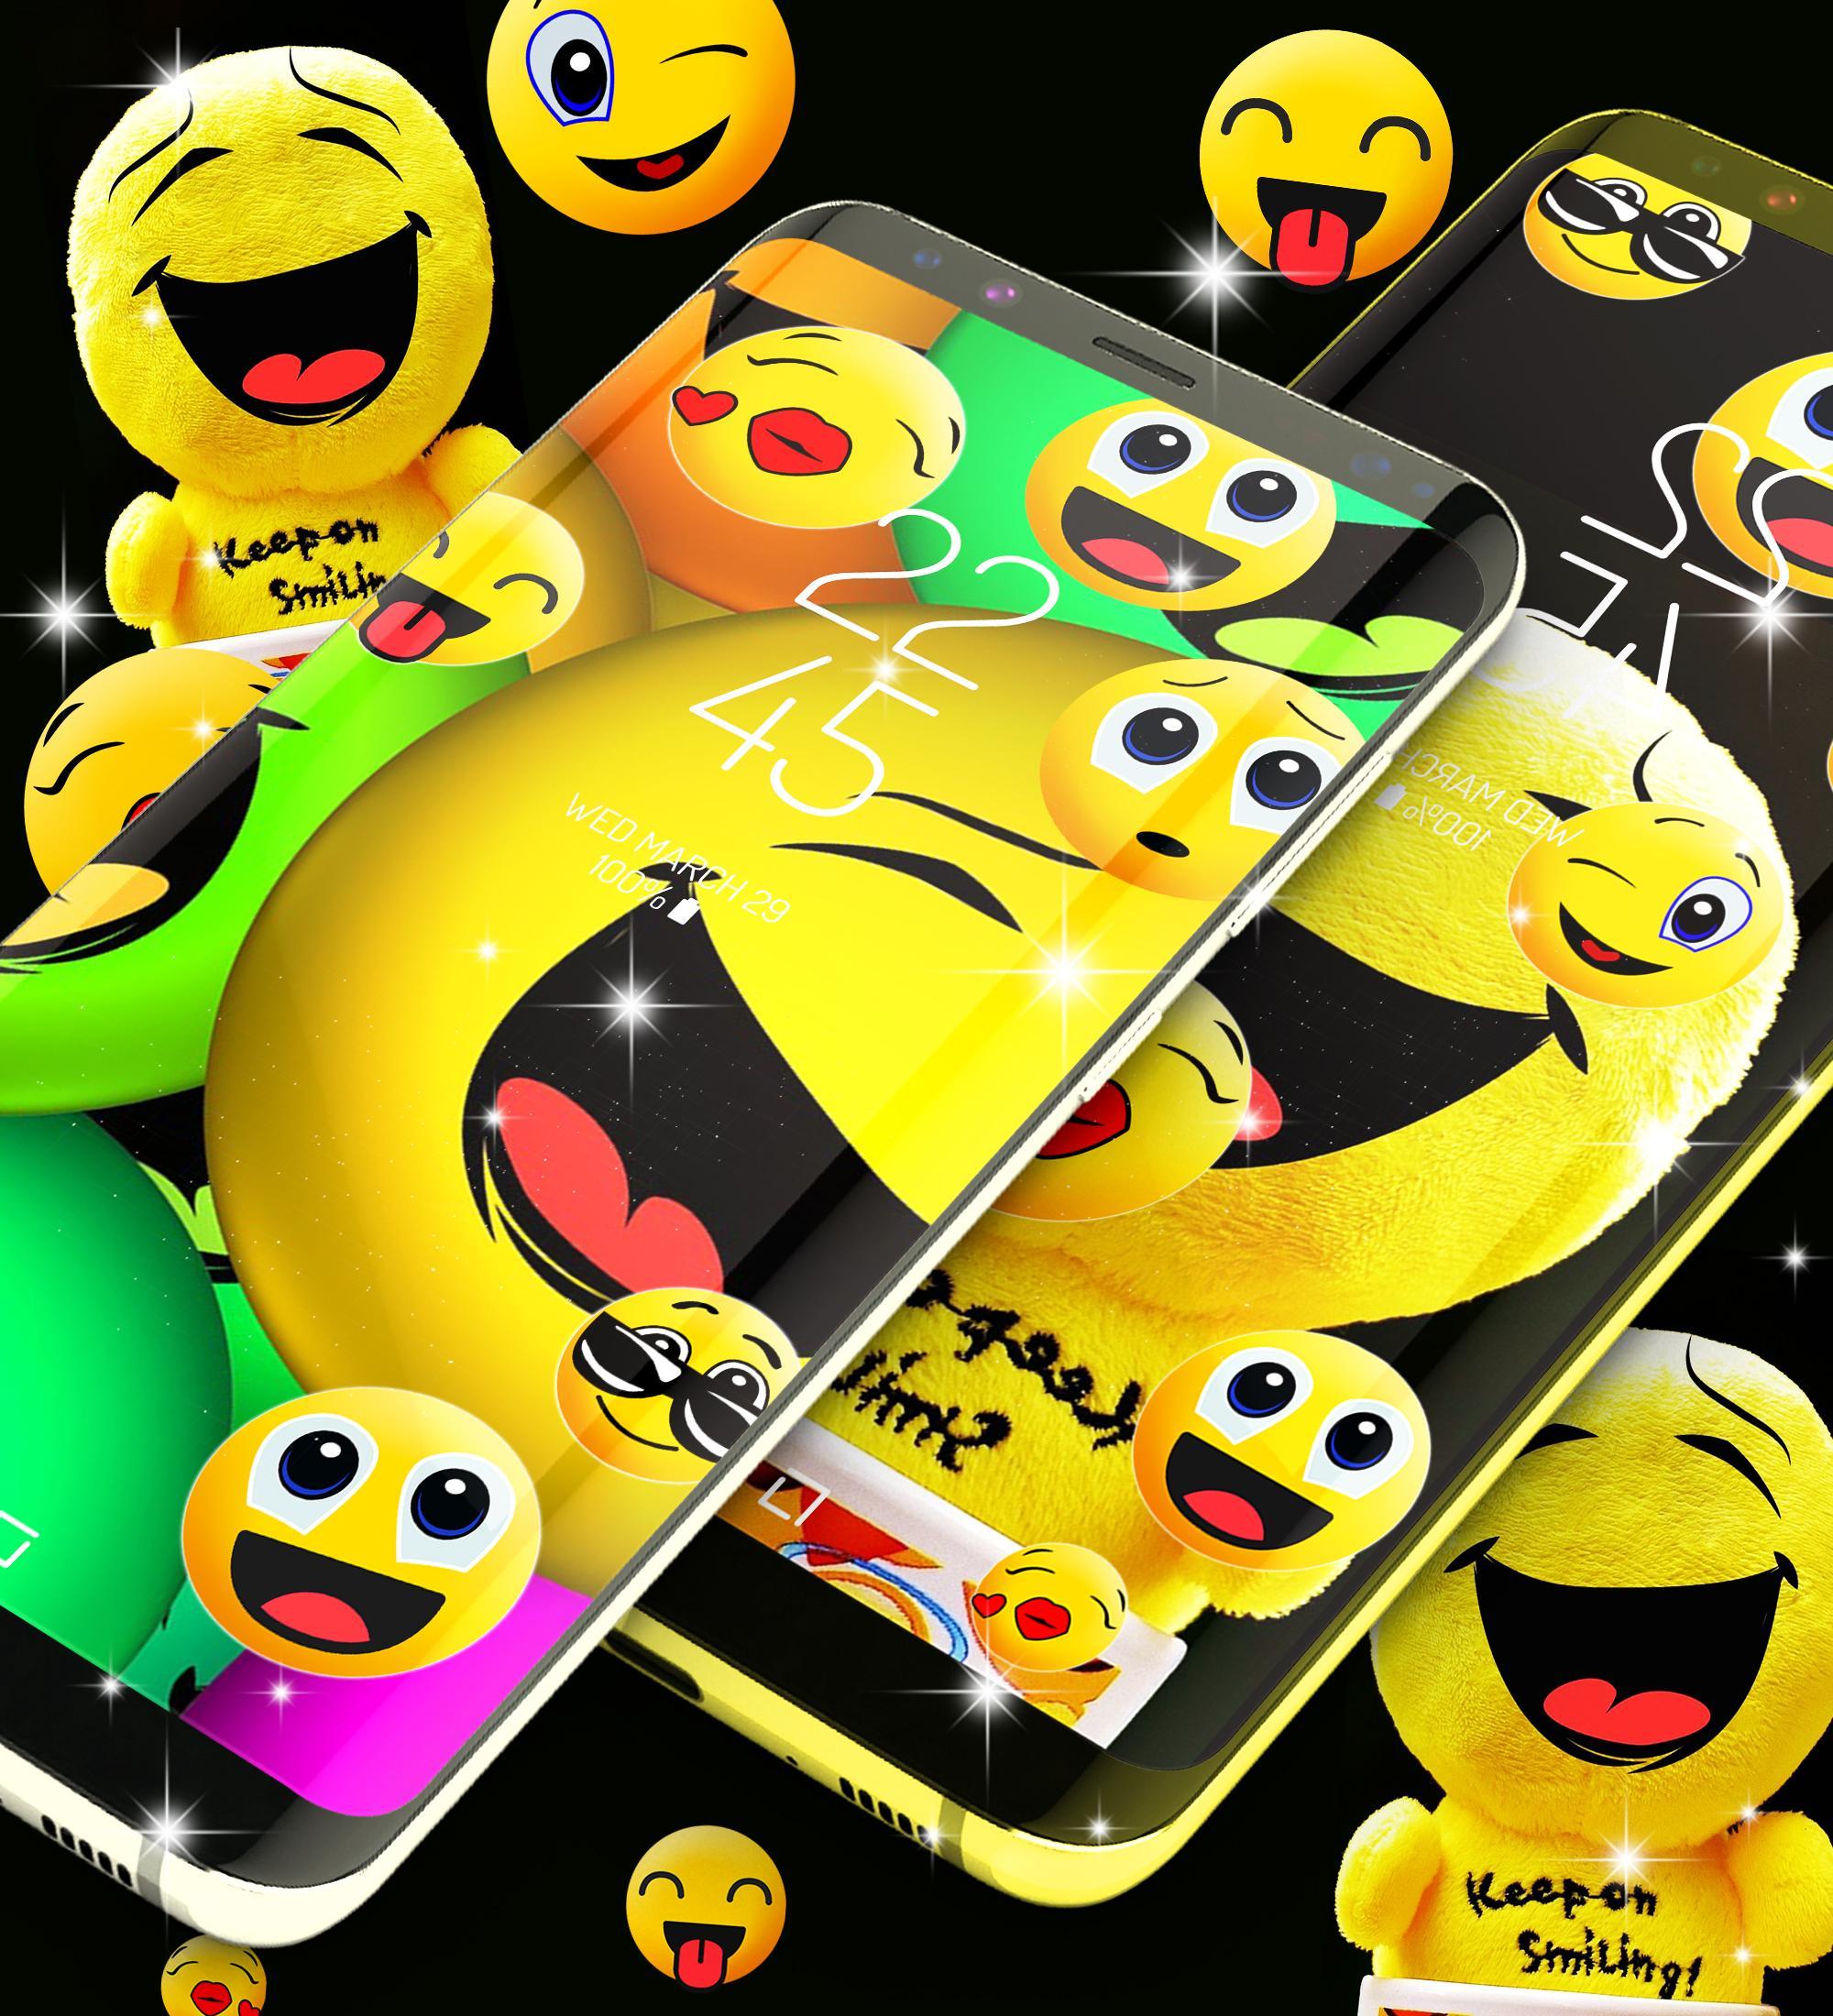 Emoji live wallpaper for Android - APK Download